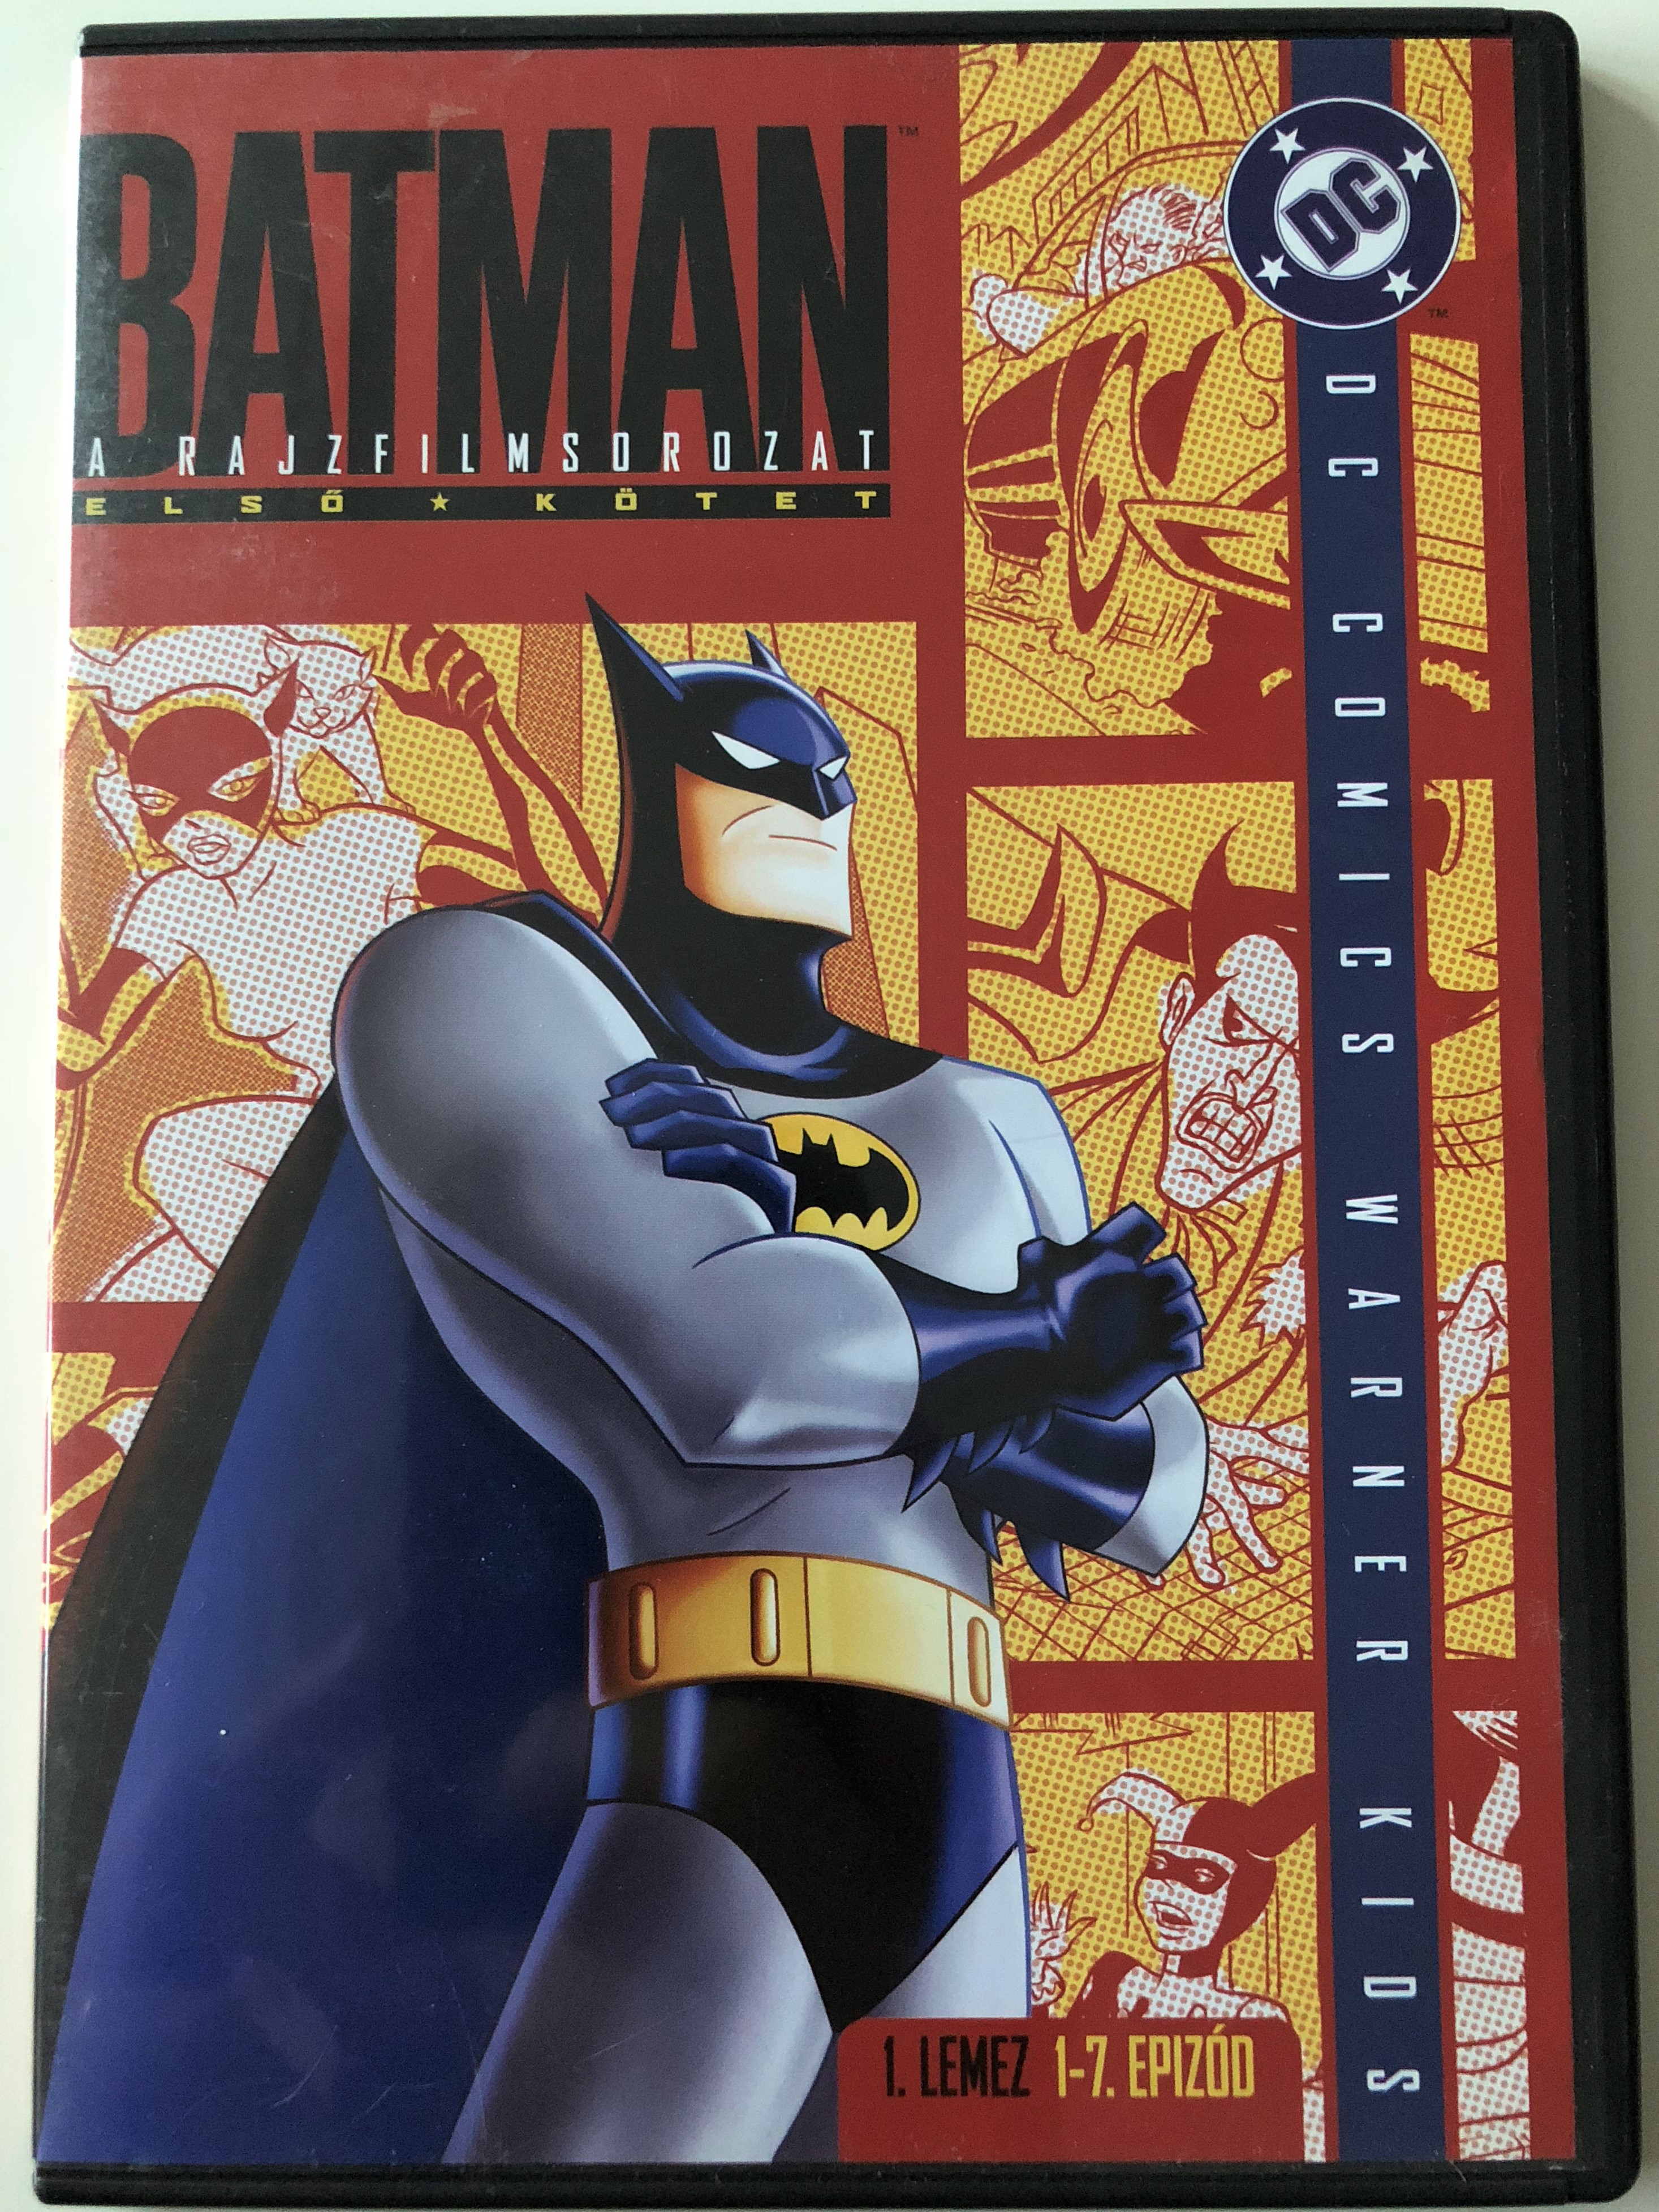 batman-the-animated-series-vol-1.-dvd-2006-batman-a-rajzfilmsorozat-1.-lemez-directed-by-bruce-w.-timm-eric-radomski-1-.jpg